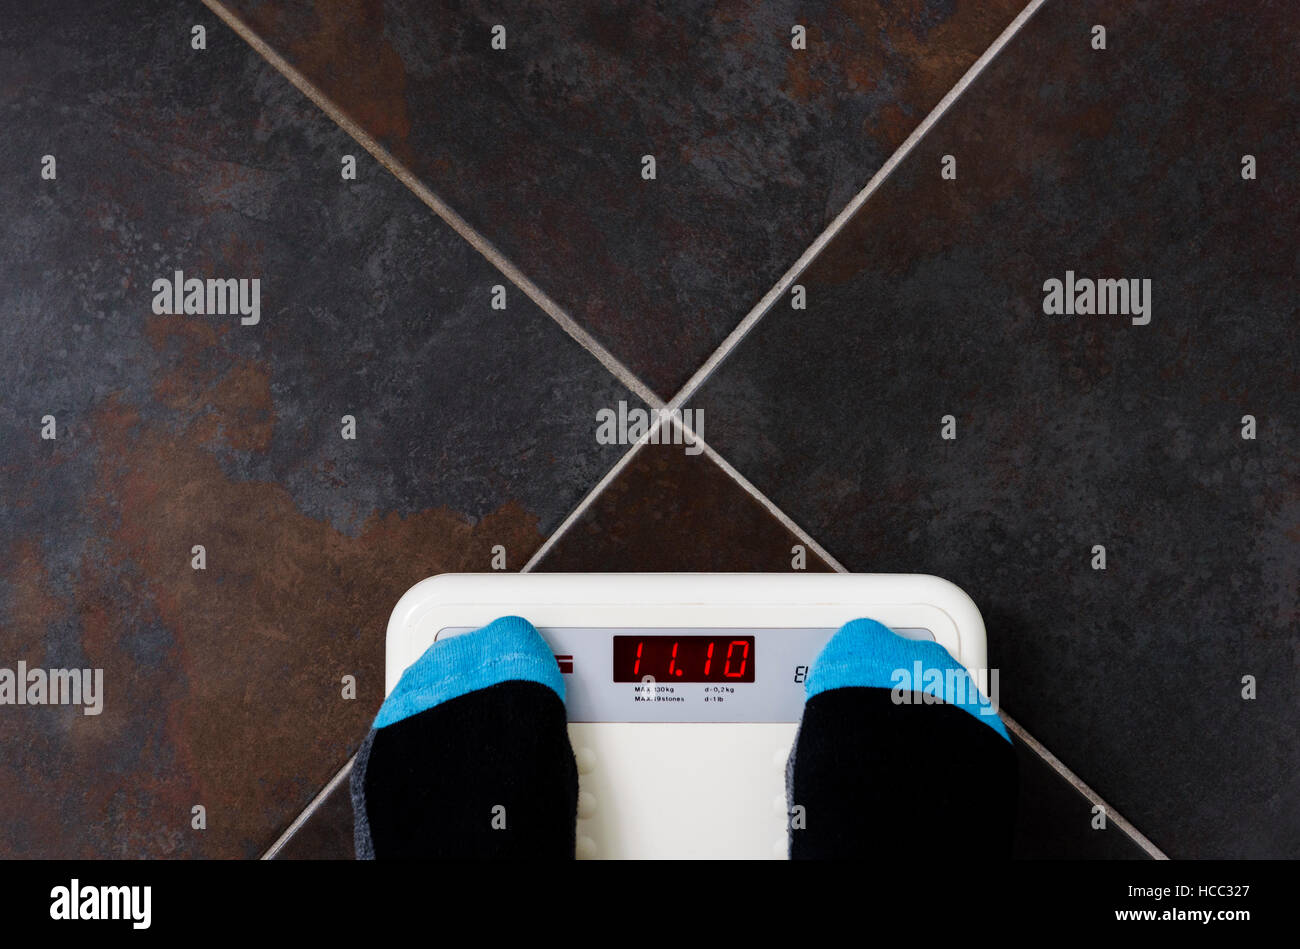 Bathroom scales on tiled floor with man wearing socks. Stock Photo